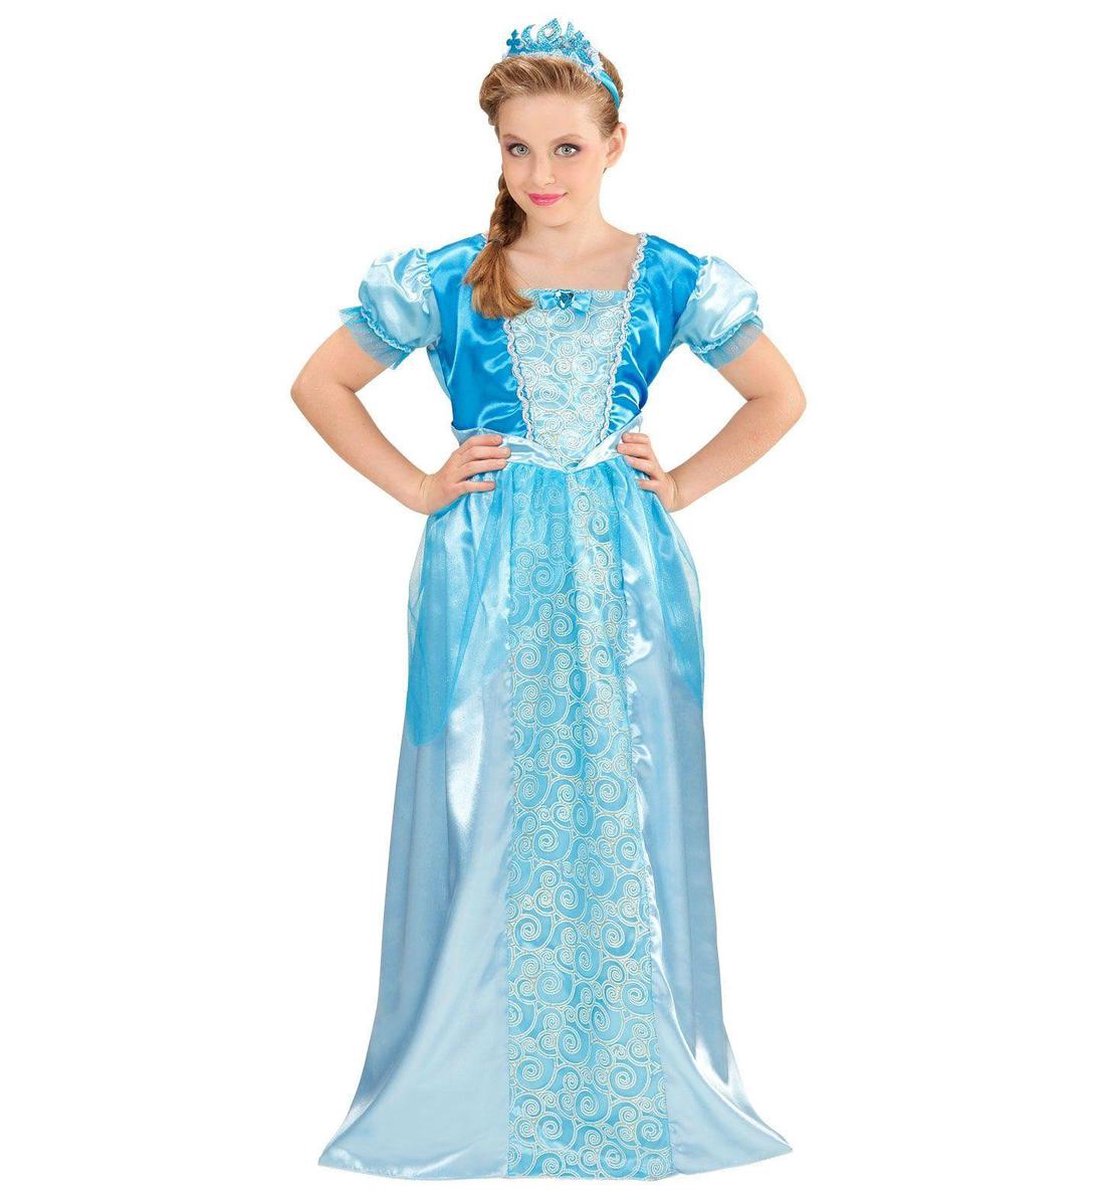 Widmann - Frozen Kostuum - Blauwe Sneeuwprinses - Meisje - Blauw - Maat 128 - Carnavalskleding - Verkleedkleding